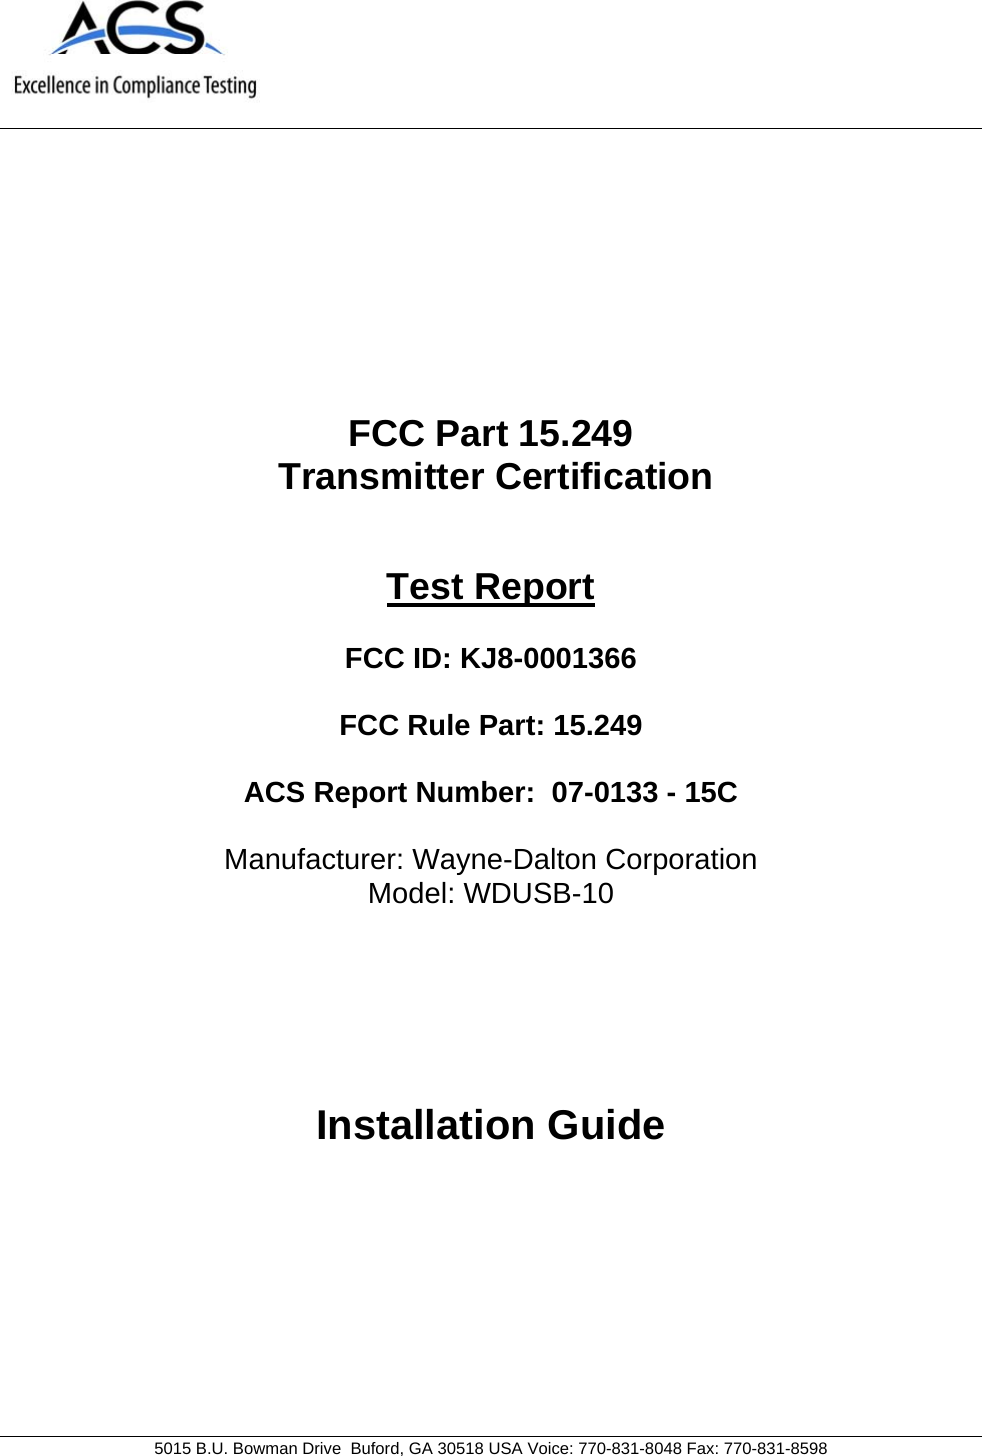   5015 B.U. Bowman Drive  Buford, GA 30518 USA Voice: 770-831-8048 Fax: 770-831-8598   FCC Part 15.249  Transmitter Certification   Test Report  FCC ID: KJ8-0001366   FCC Rule Part: 15.249  ACS Report Number:  07-0133 - 15C   Manufacturer: Wayne-Dalton Corporation Model: WDUSB-10      Installation Guide 